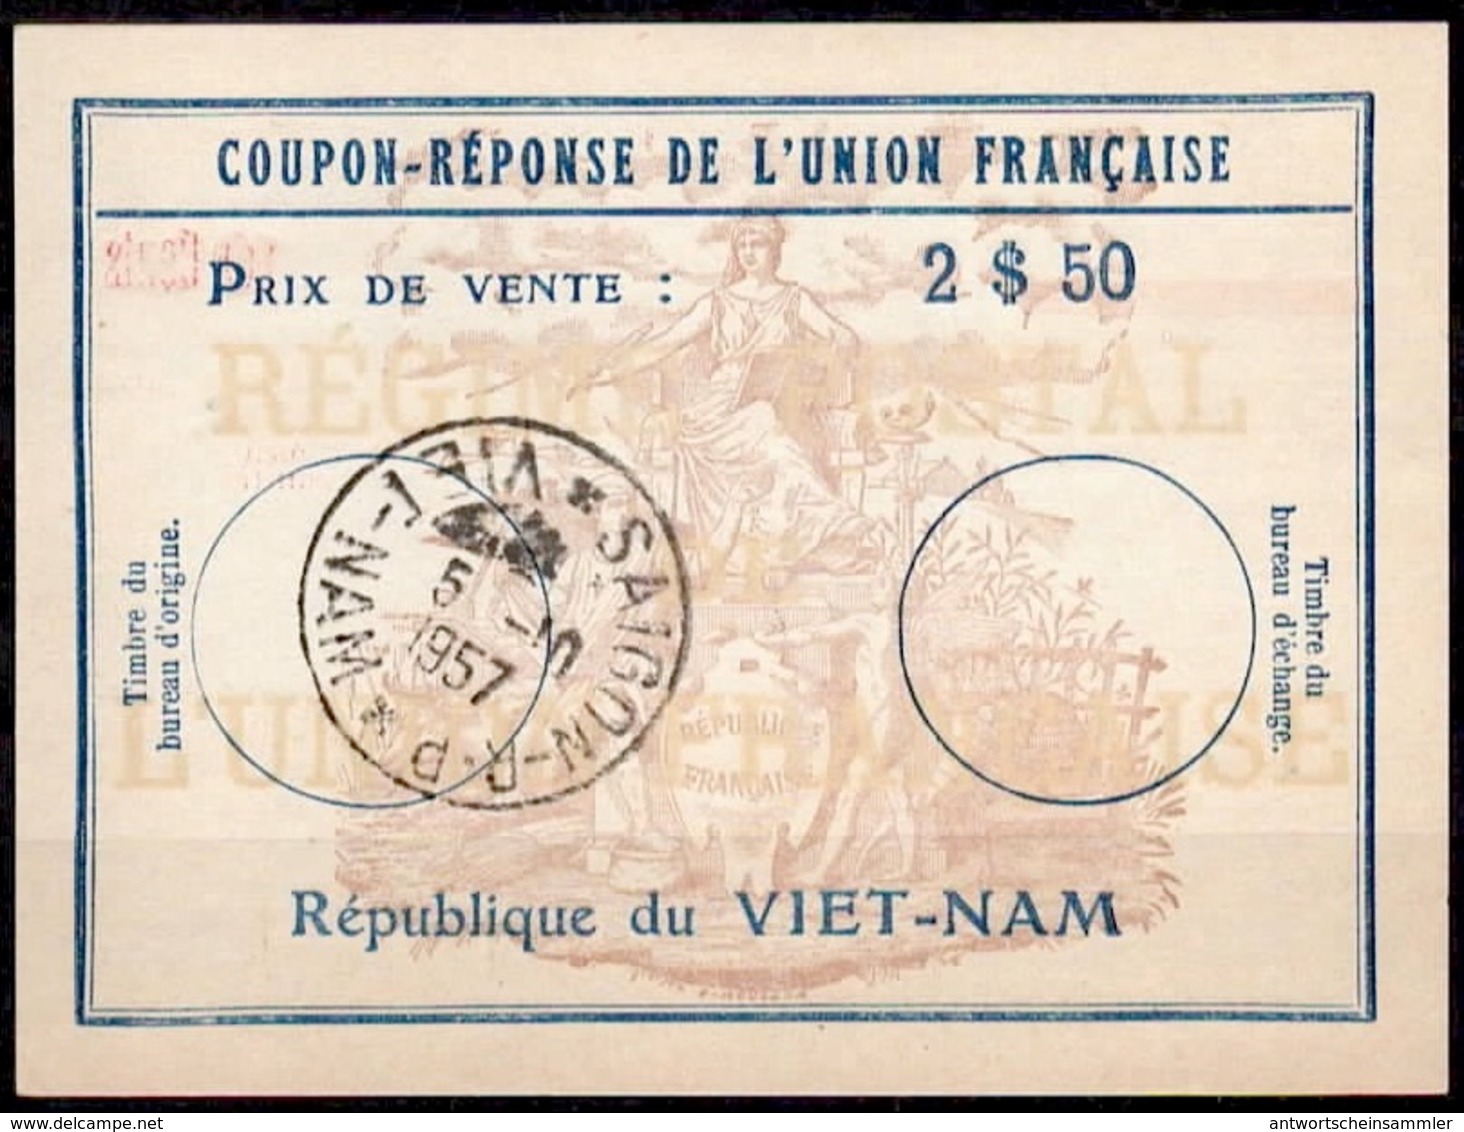 VIETNAM / VIET-NAM Coupon Reponse De L'Union Francaise Uf8C  2 $ 50  Reply Antwortschein O SAIGON 5.10.57 - Viêt-Nam